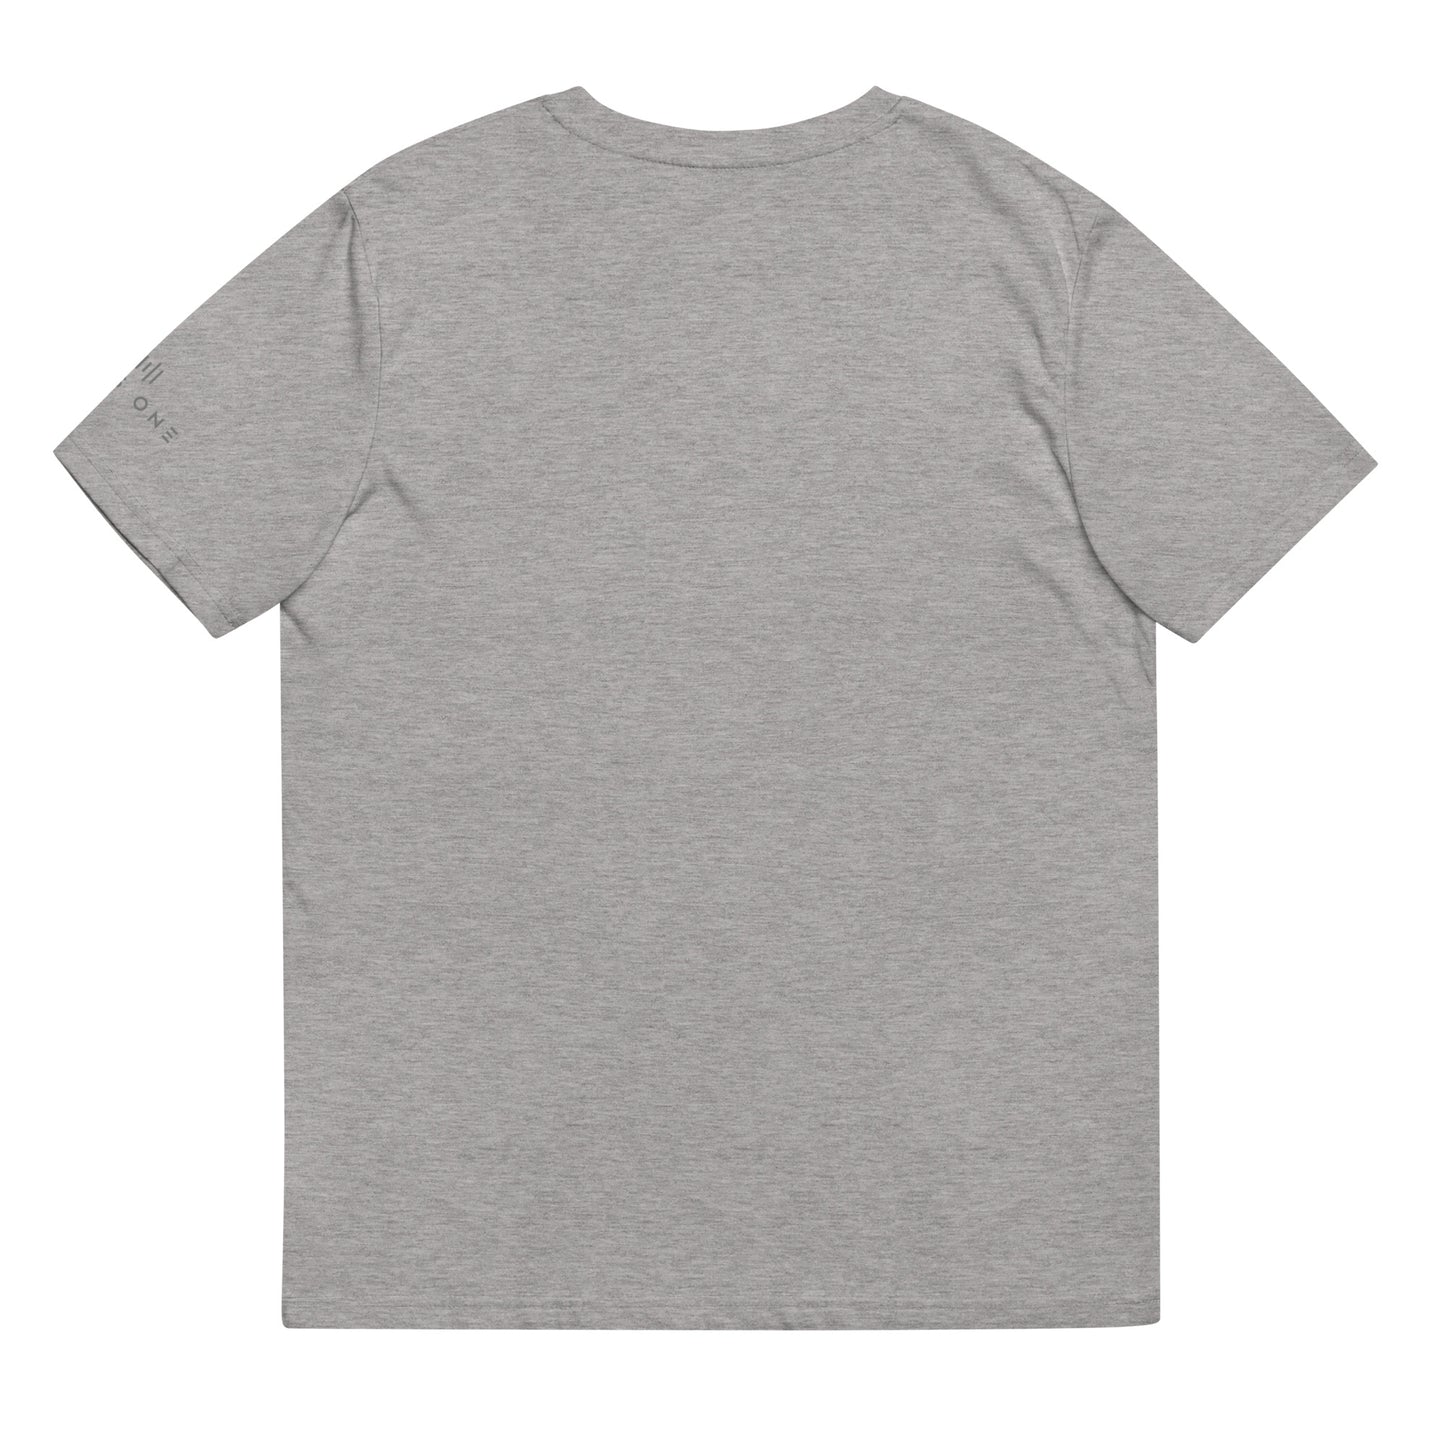 SK8 Kid (v2) Unisex organic cotton t-shirt